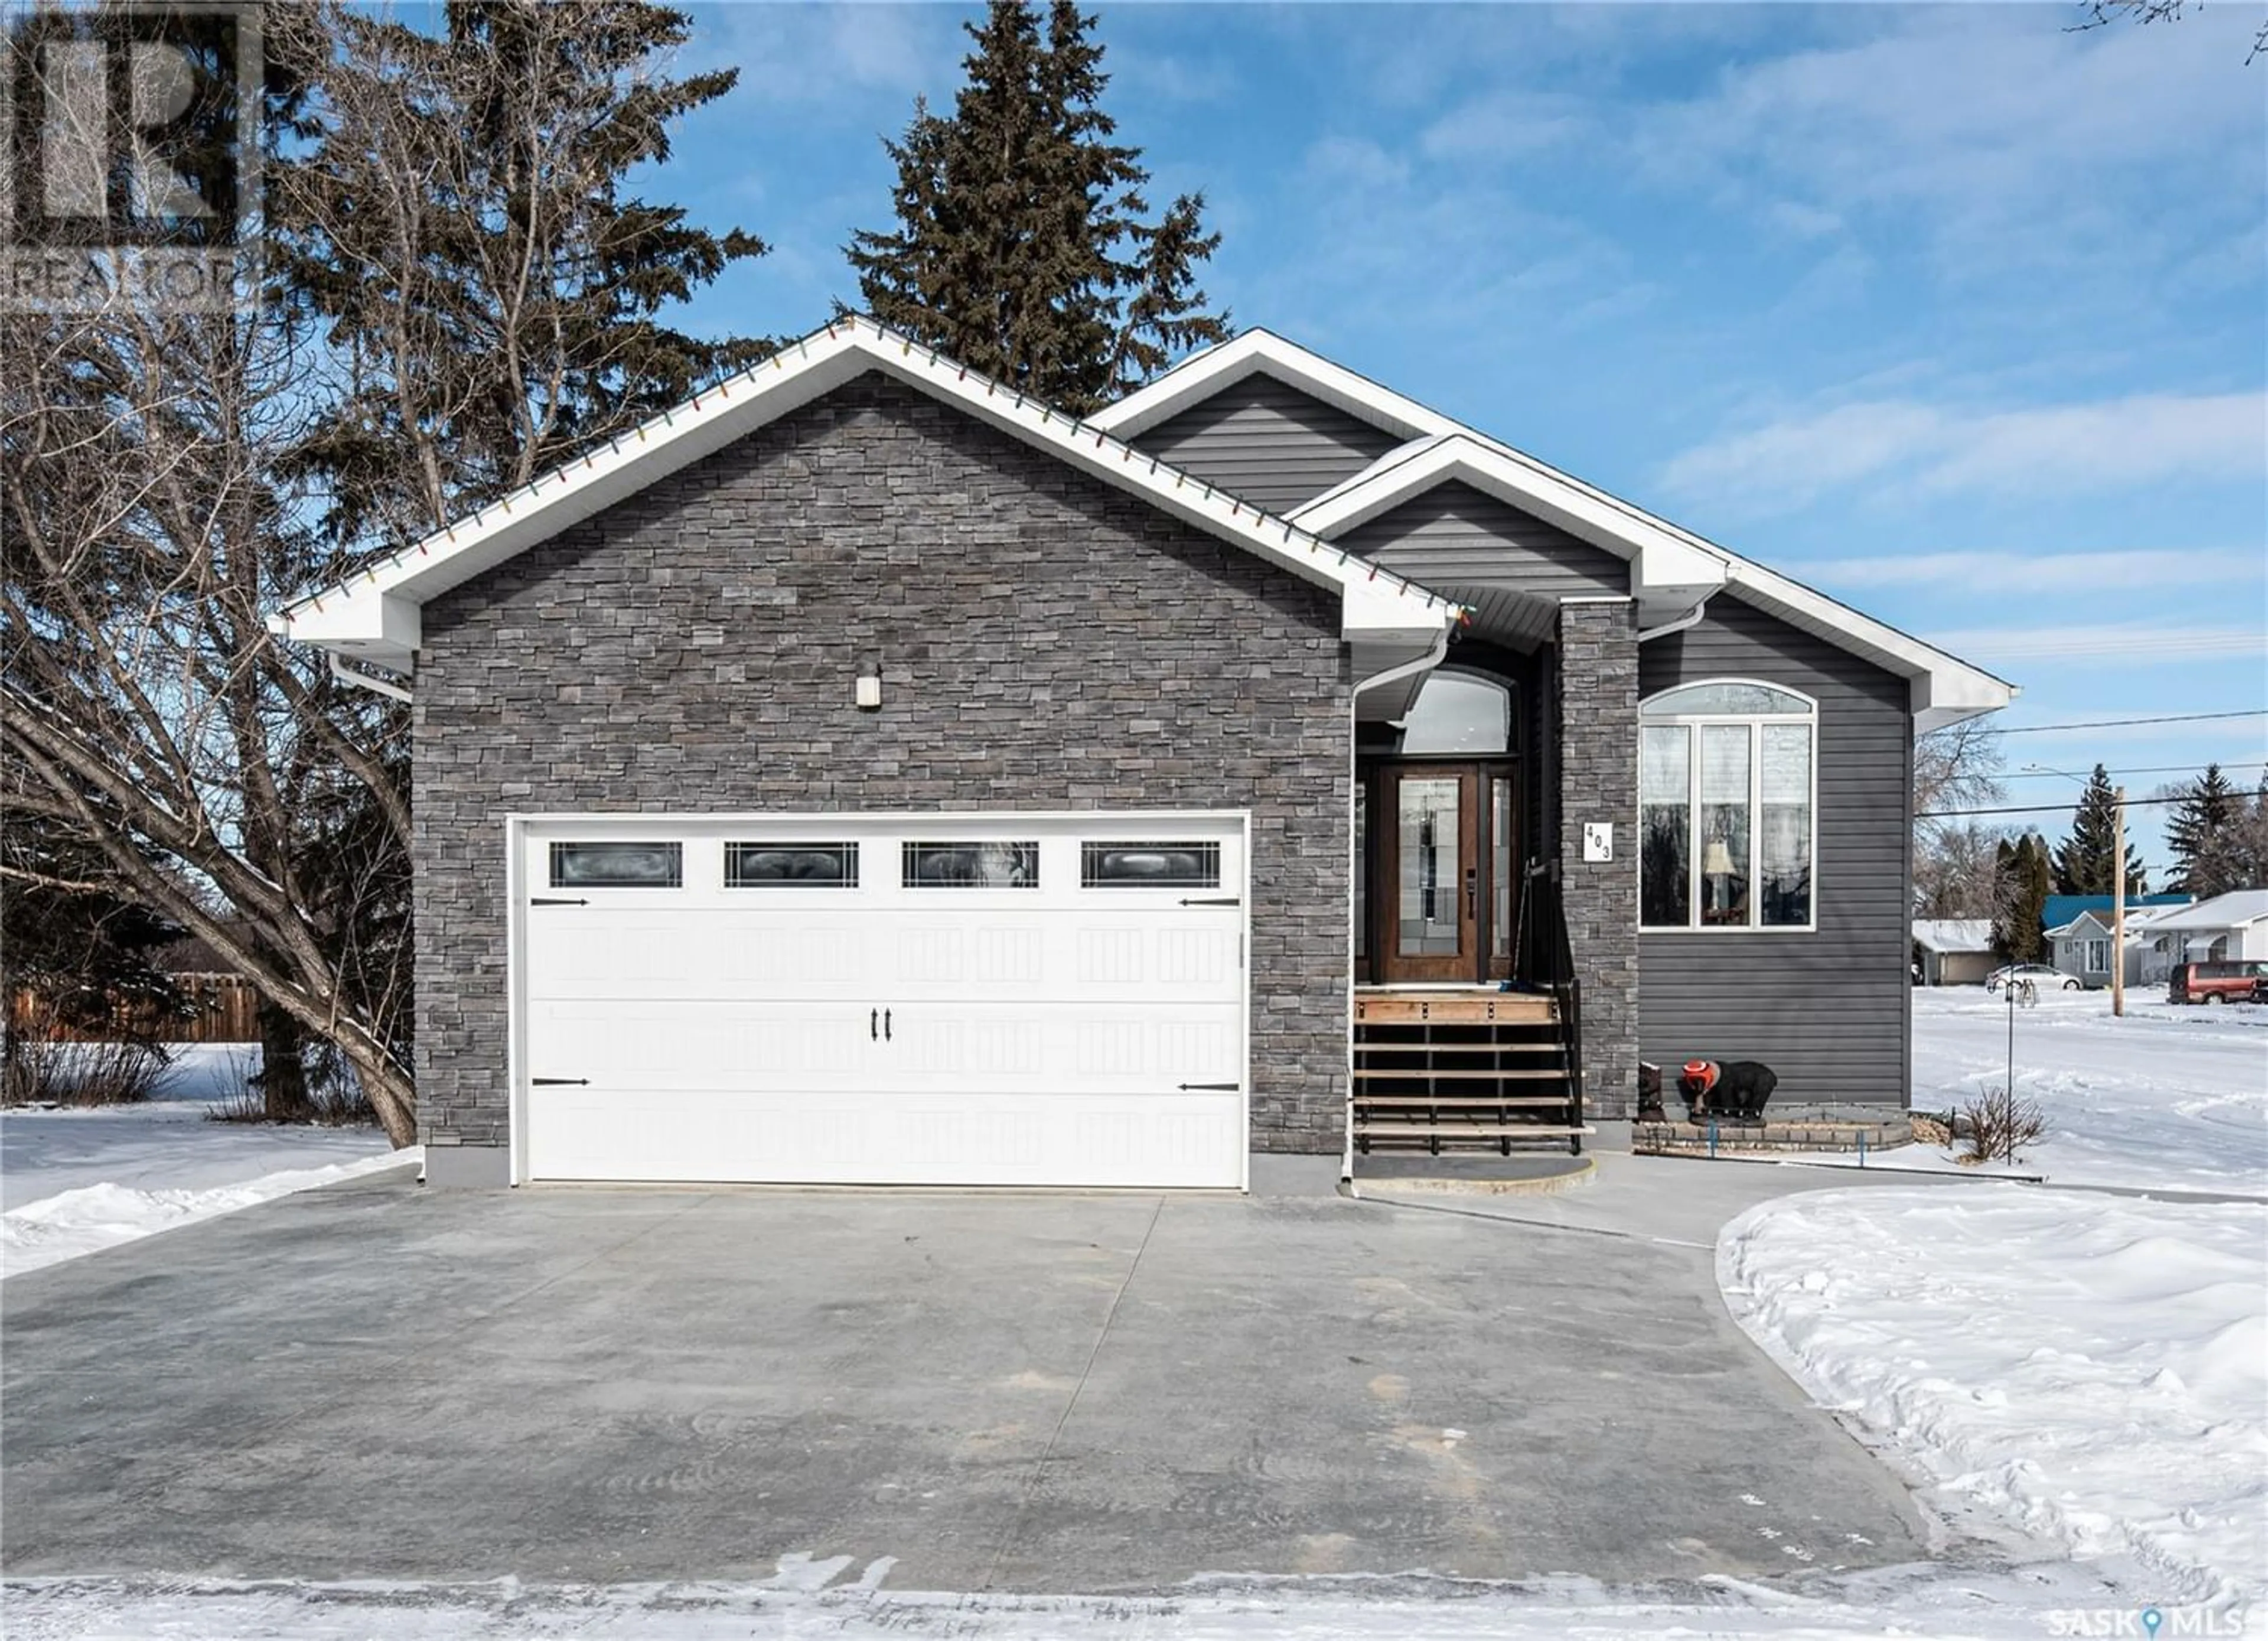 Home with stucco exterior material for 403 Main STREET, Cudworth Saskatchewan S0K1B0